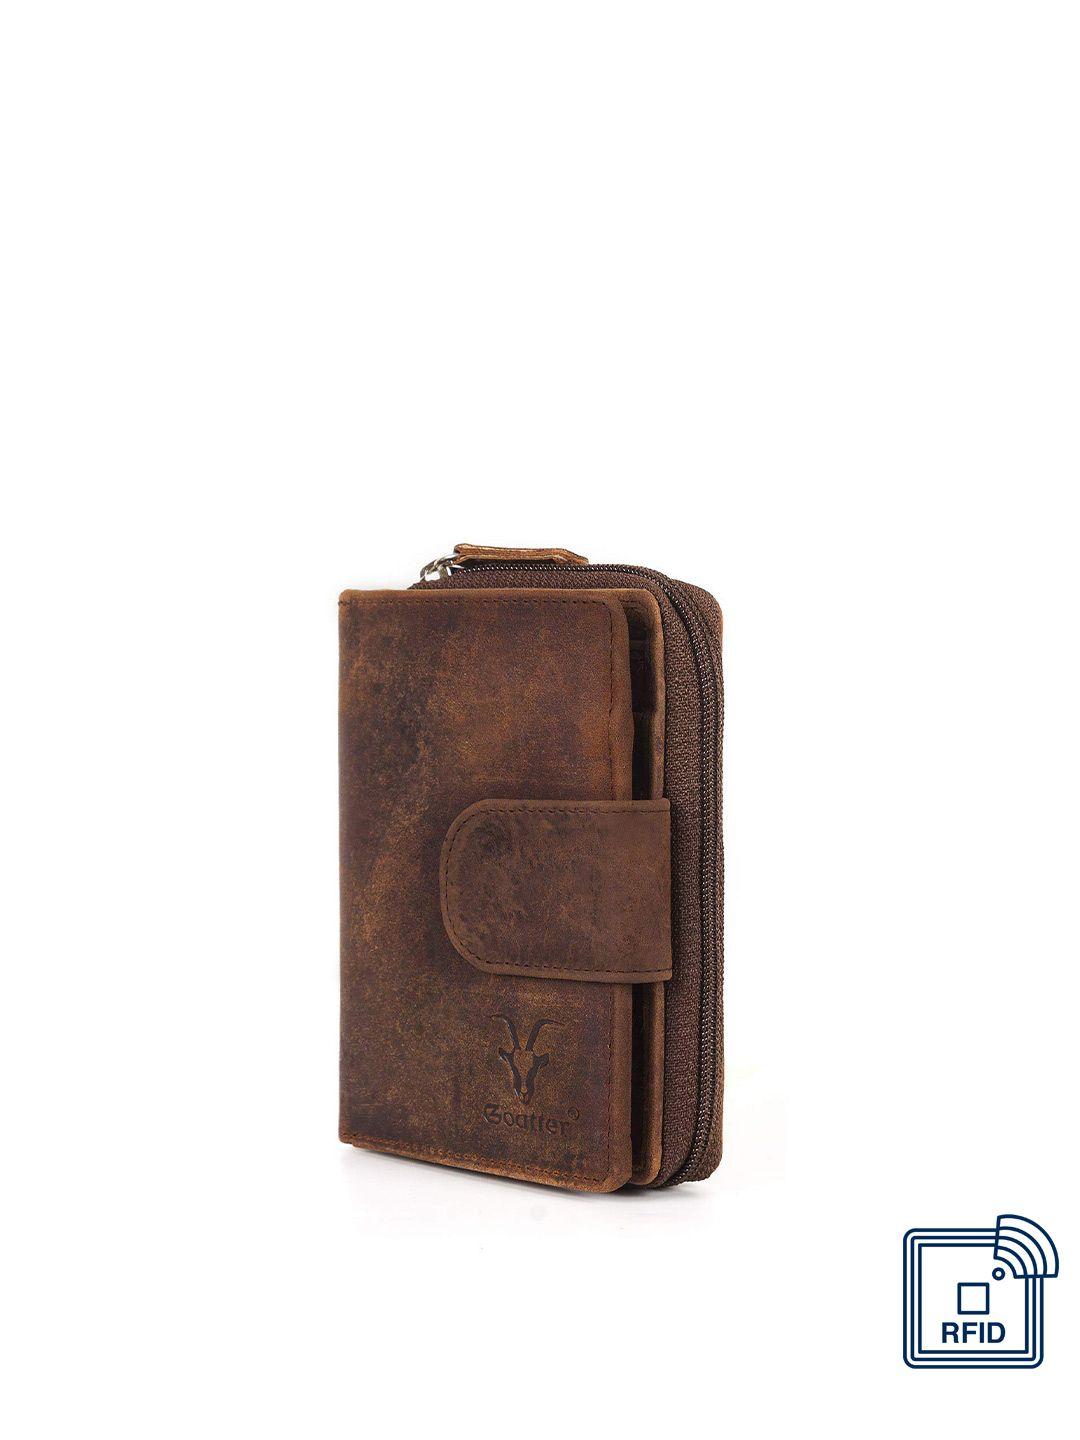 goatter men coffee brown leather two fold wallet